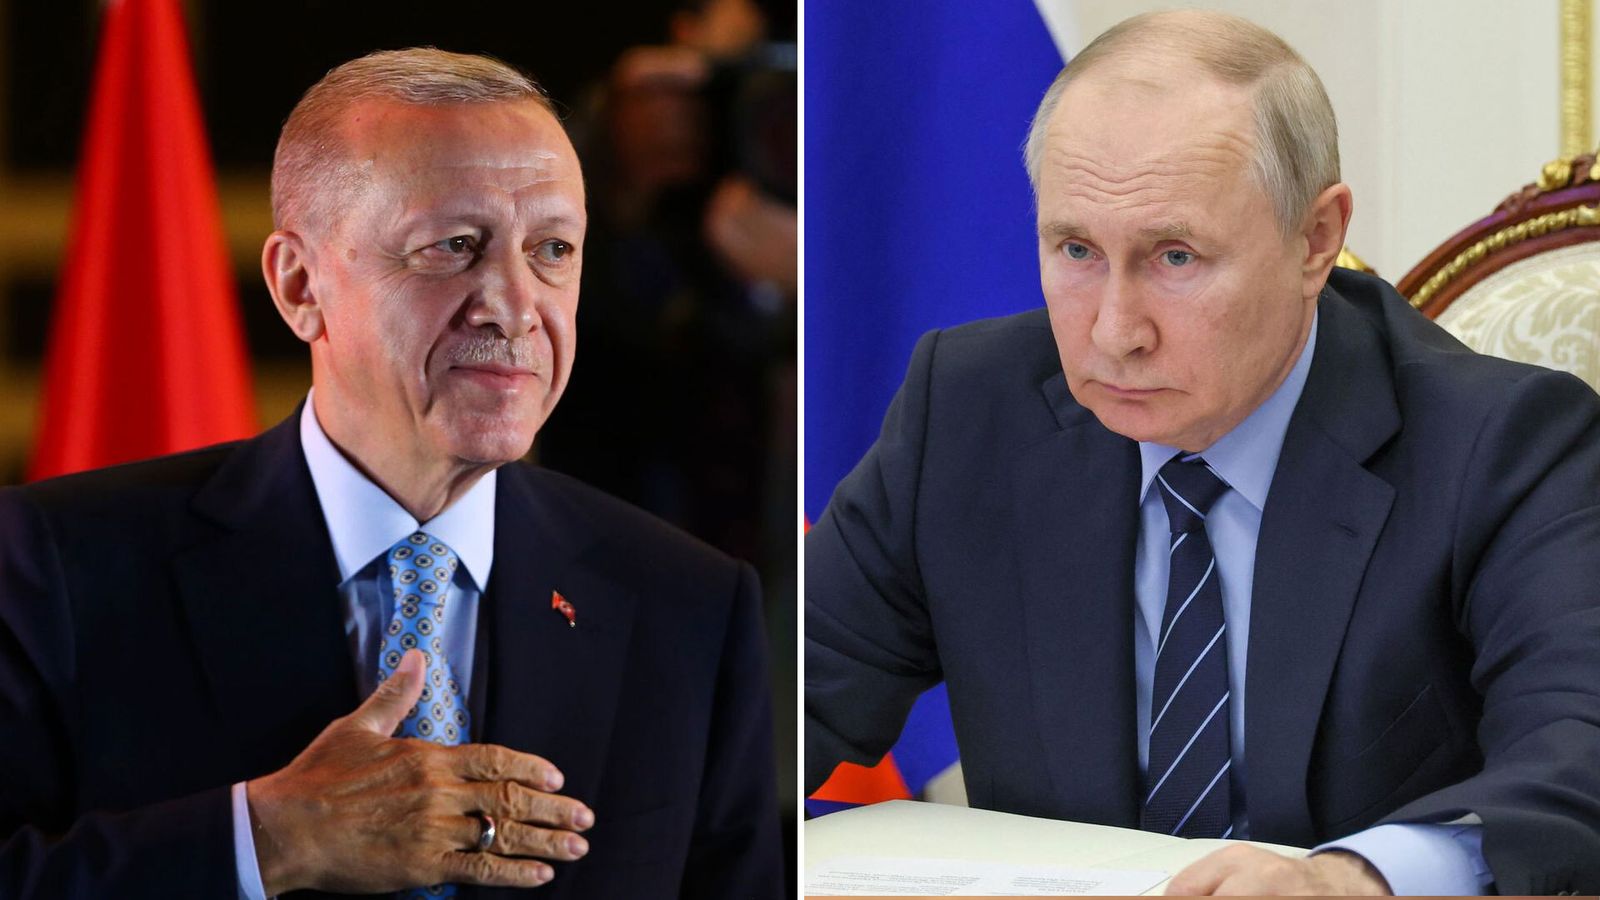 Putin and Erdogan meeting: Russia and Turkey's leaders to discuss Ukraine and grain in Sochi next week